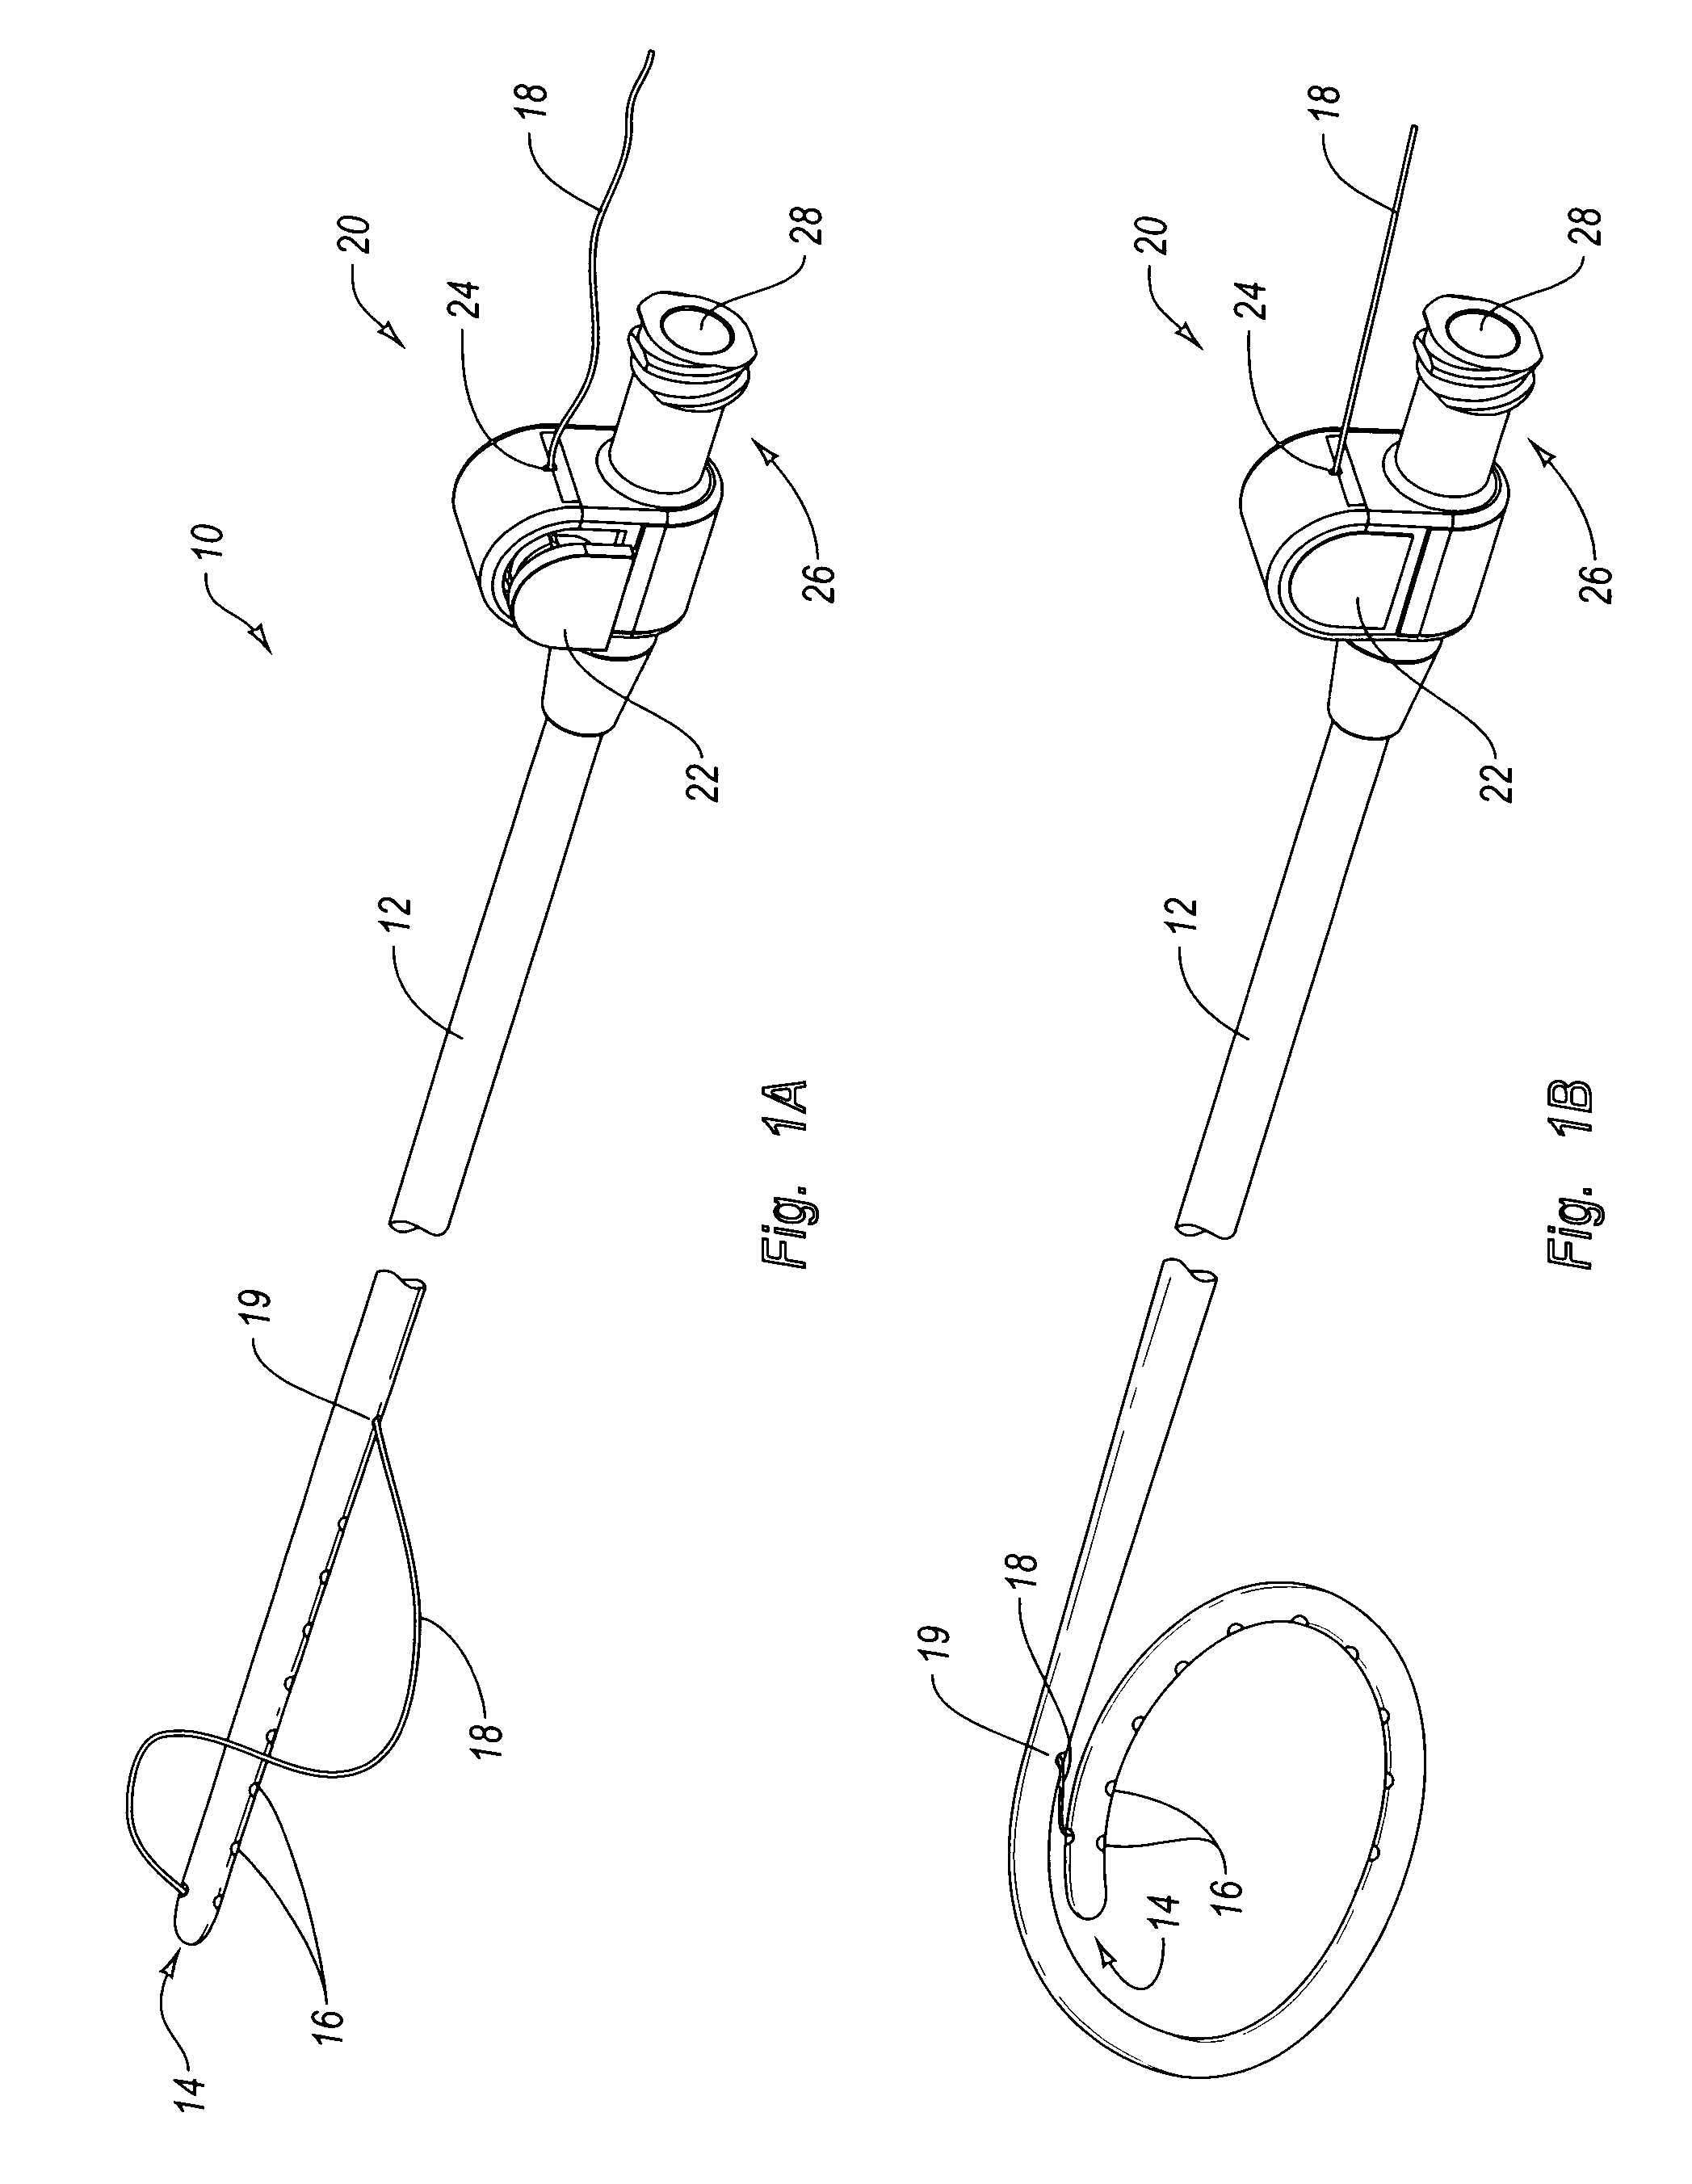 Drainage catheter with lockable hub